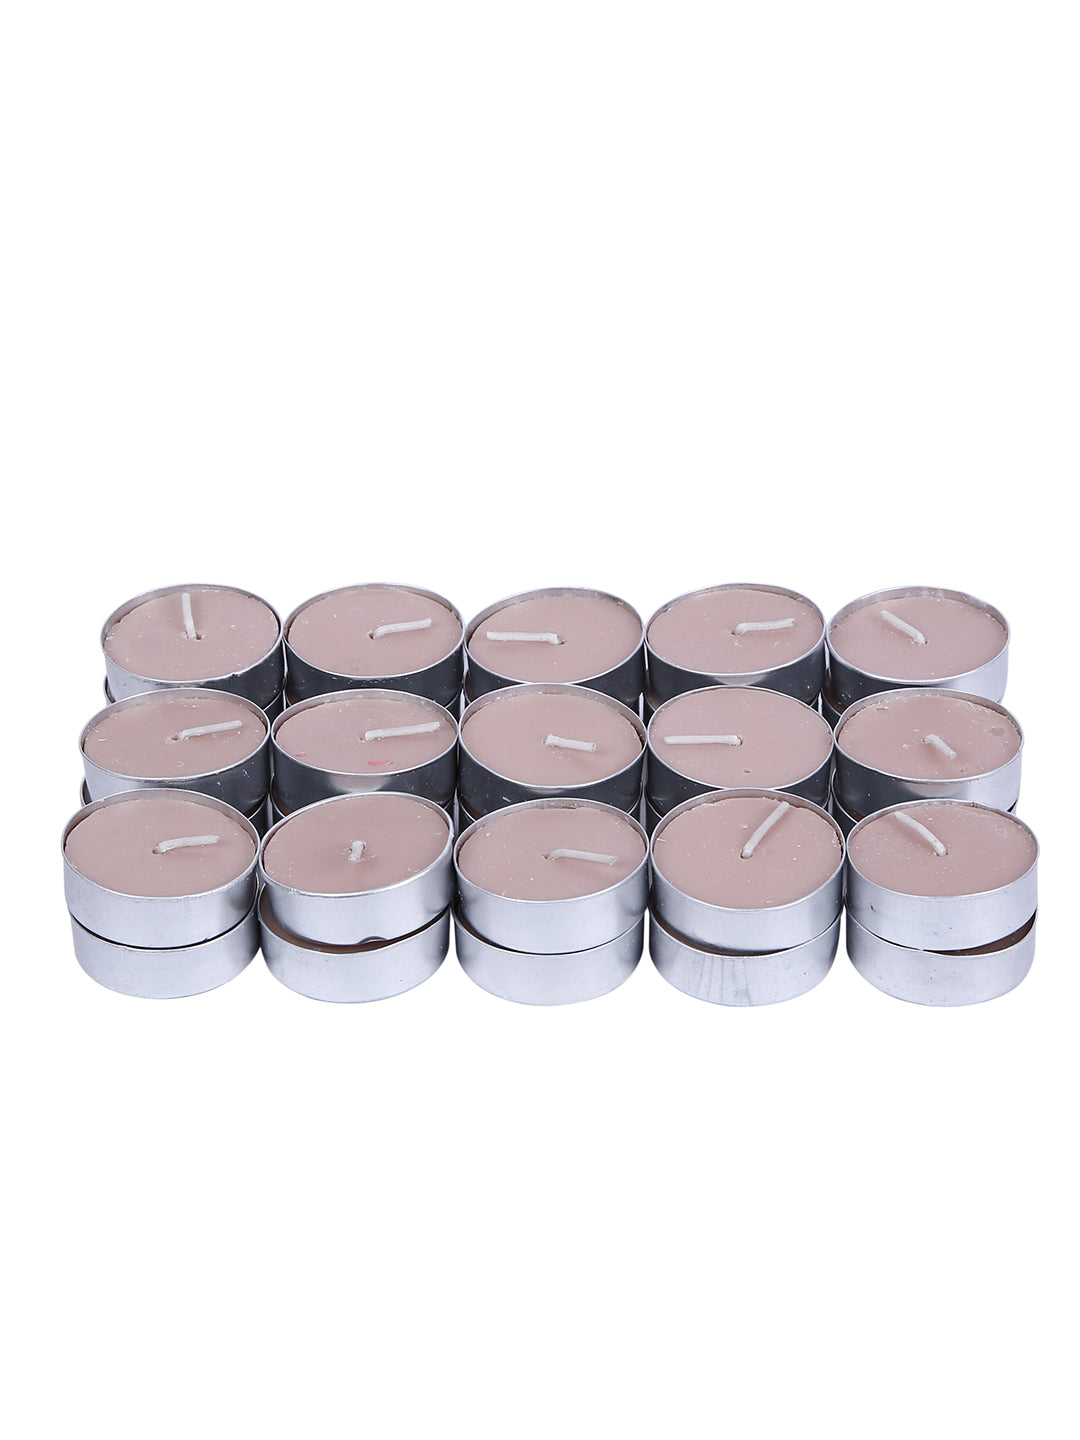 Hosley Highly Fragranced Sandalwood Tea Light Candles (Set of 30)